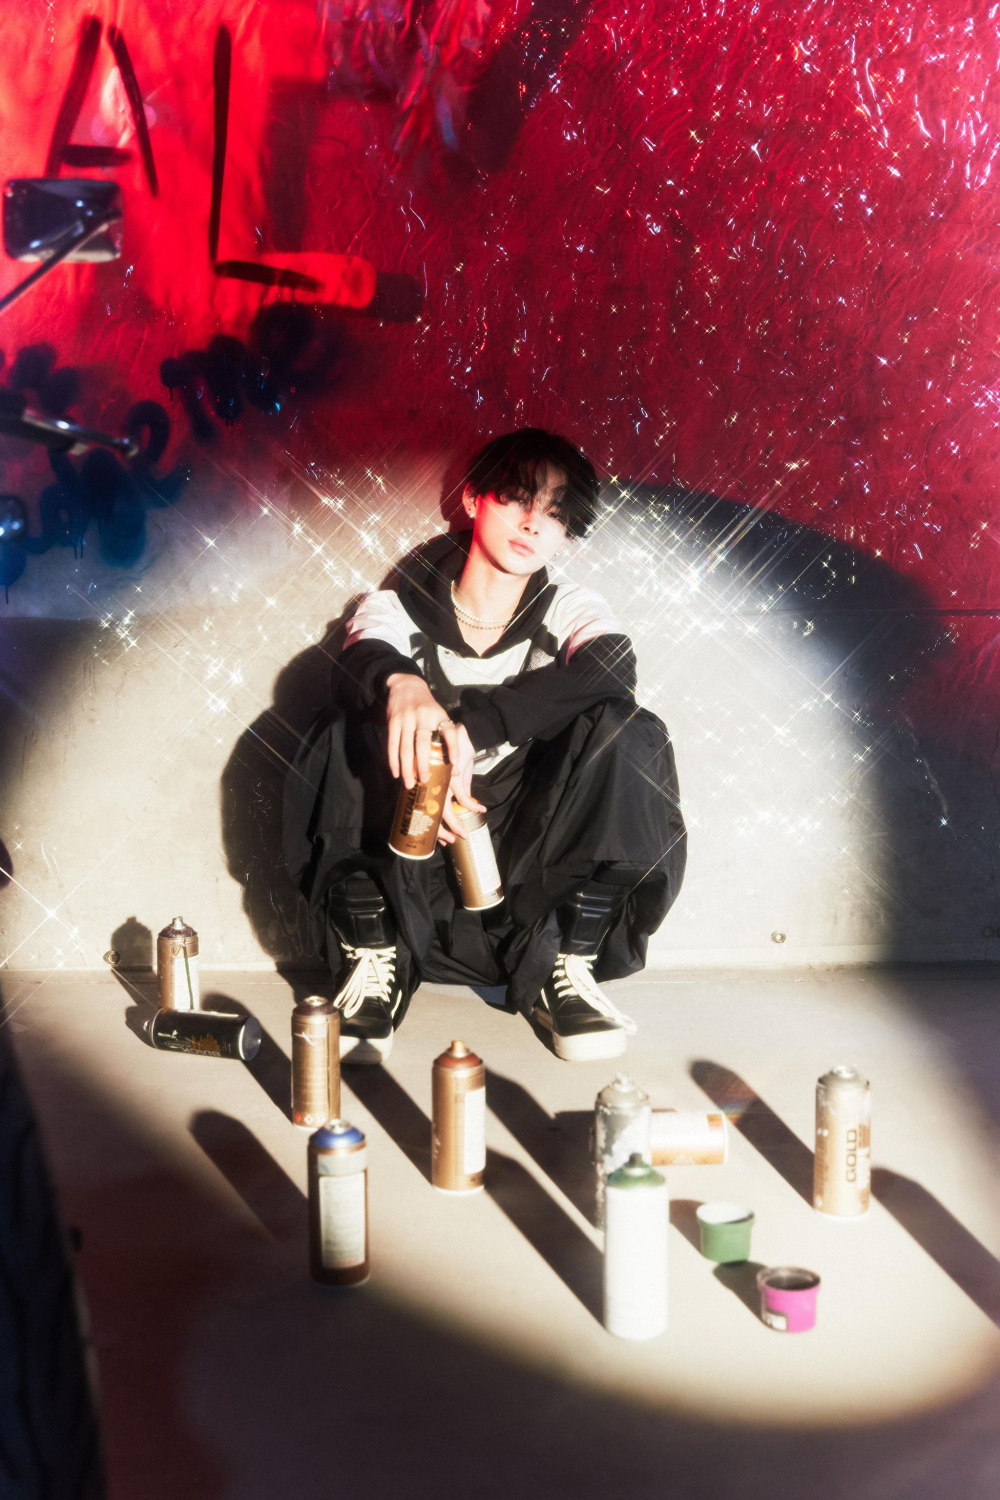 [Камбэк] ENHYPEN мини-альбом «MANIFESTO: Day 1»: музыкальный клип "ParadoXXX Invasion" (бисайд)